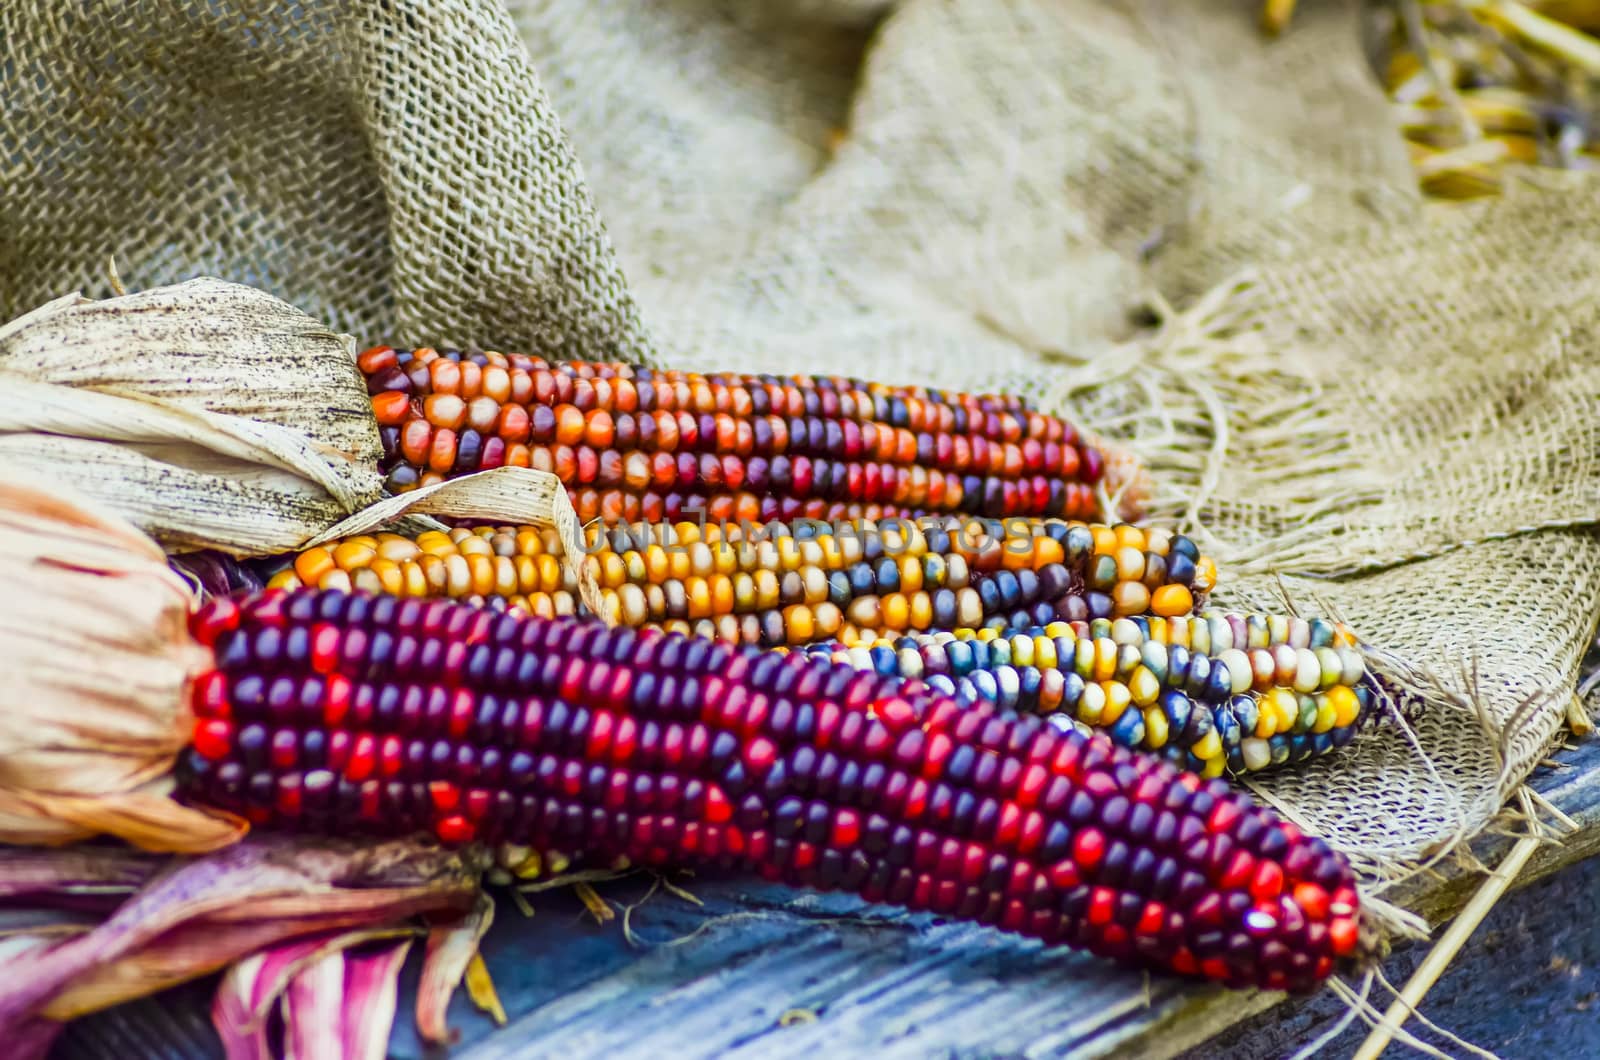 indian decorative corn on farm display